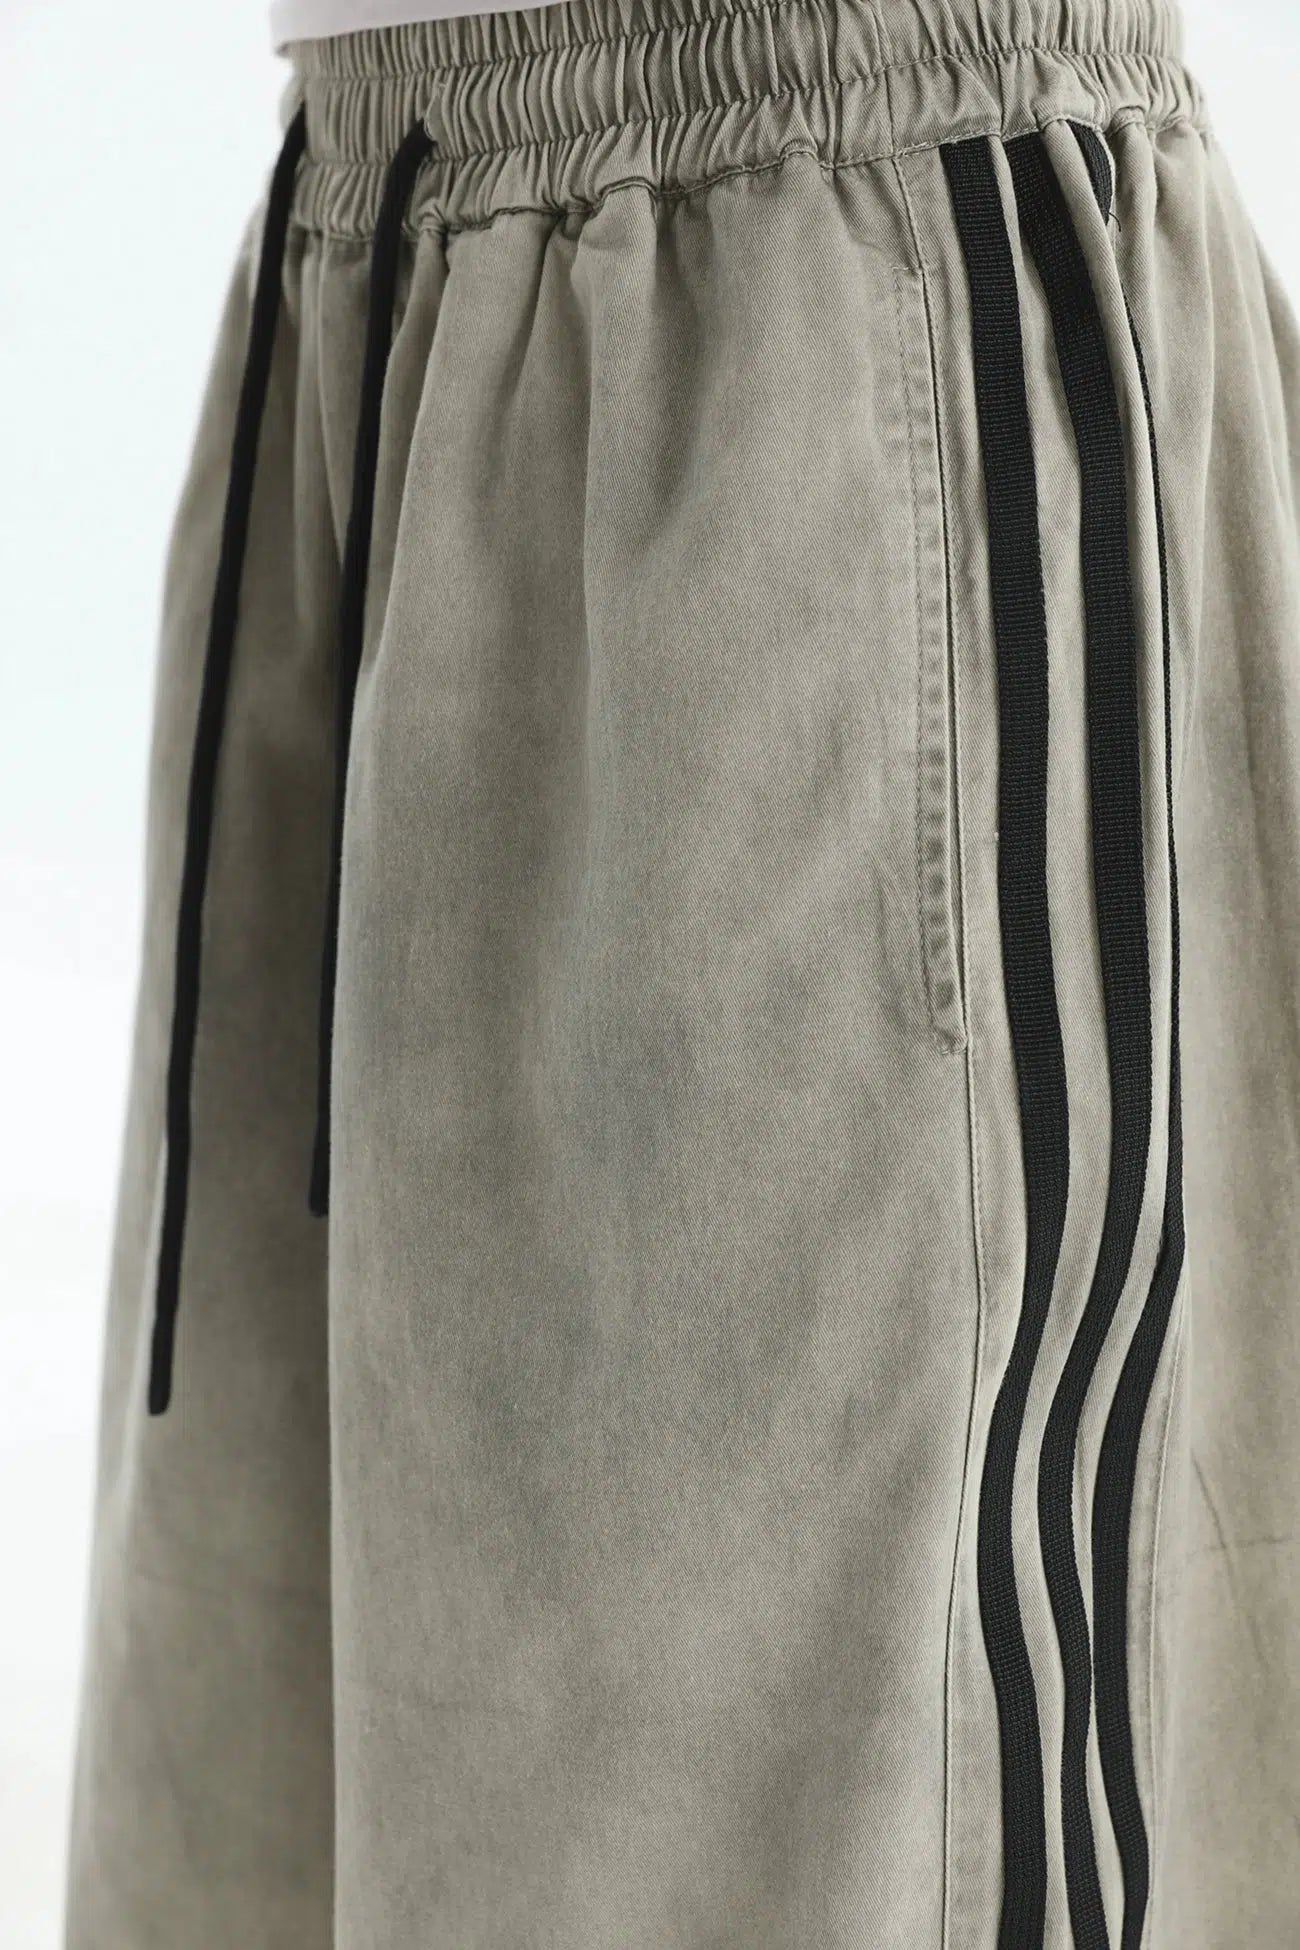 Drawstring Three-Stripes Pants Korean Street Fashion Pants By INS Korea Shop Online at OH Vault